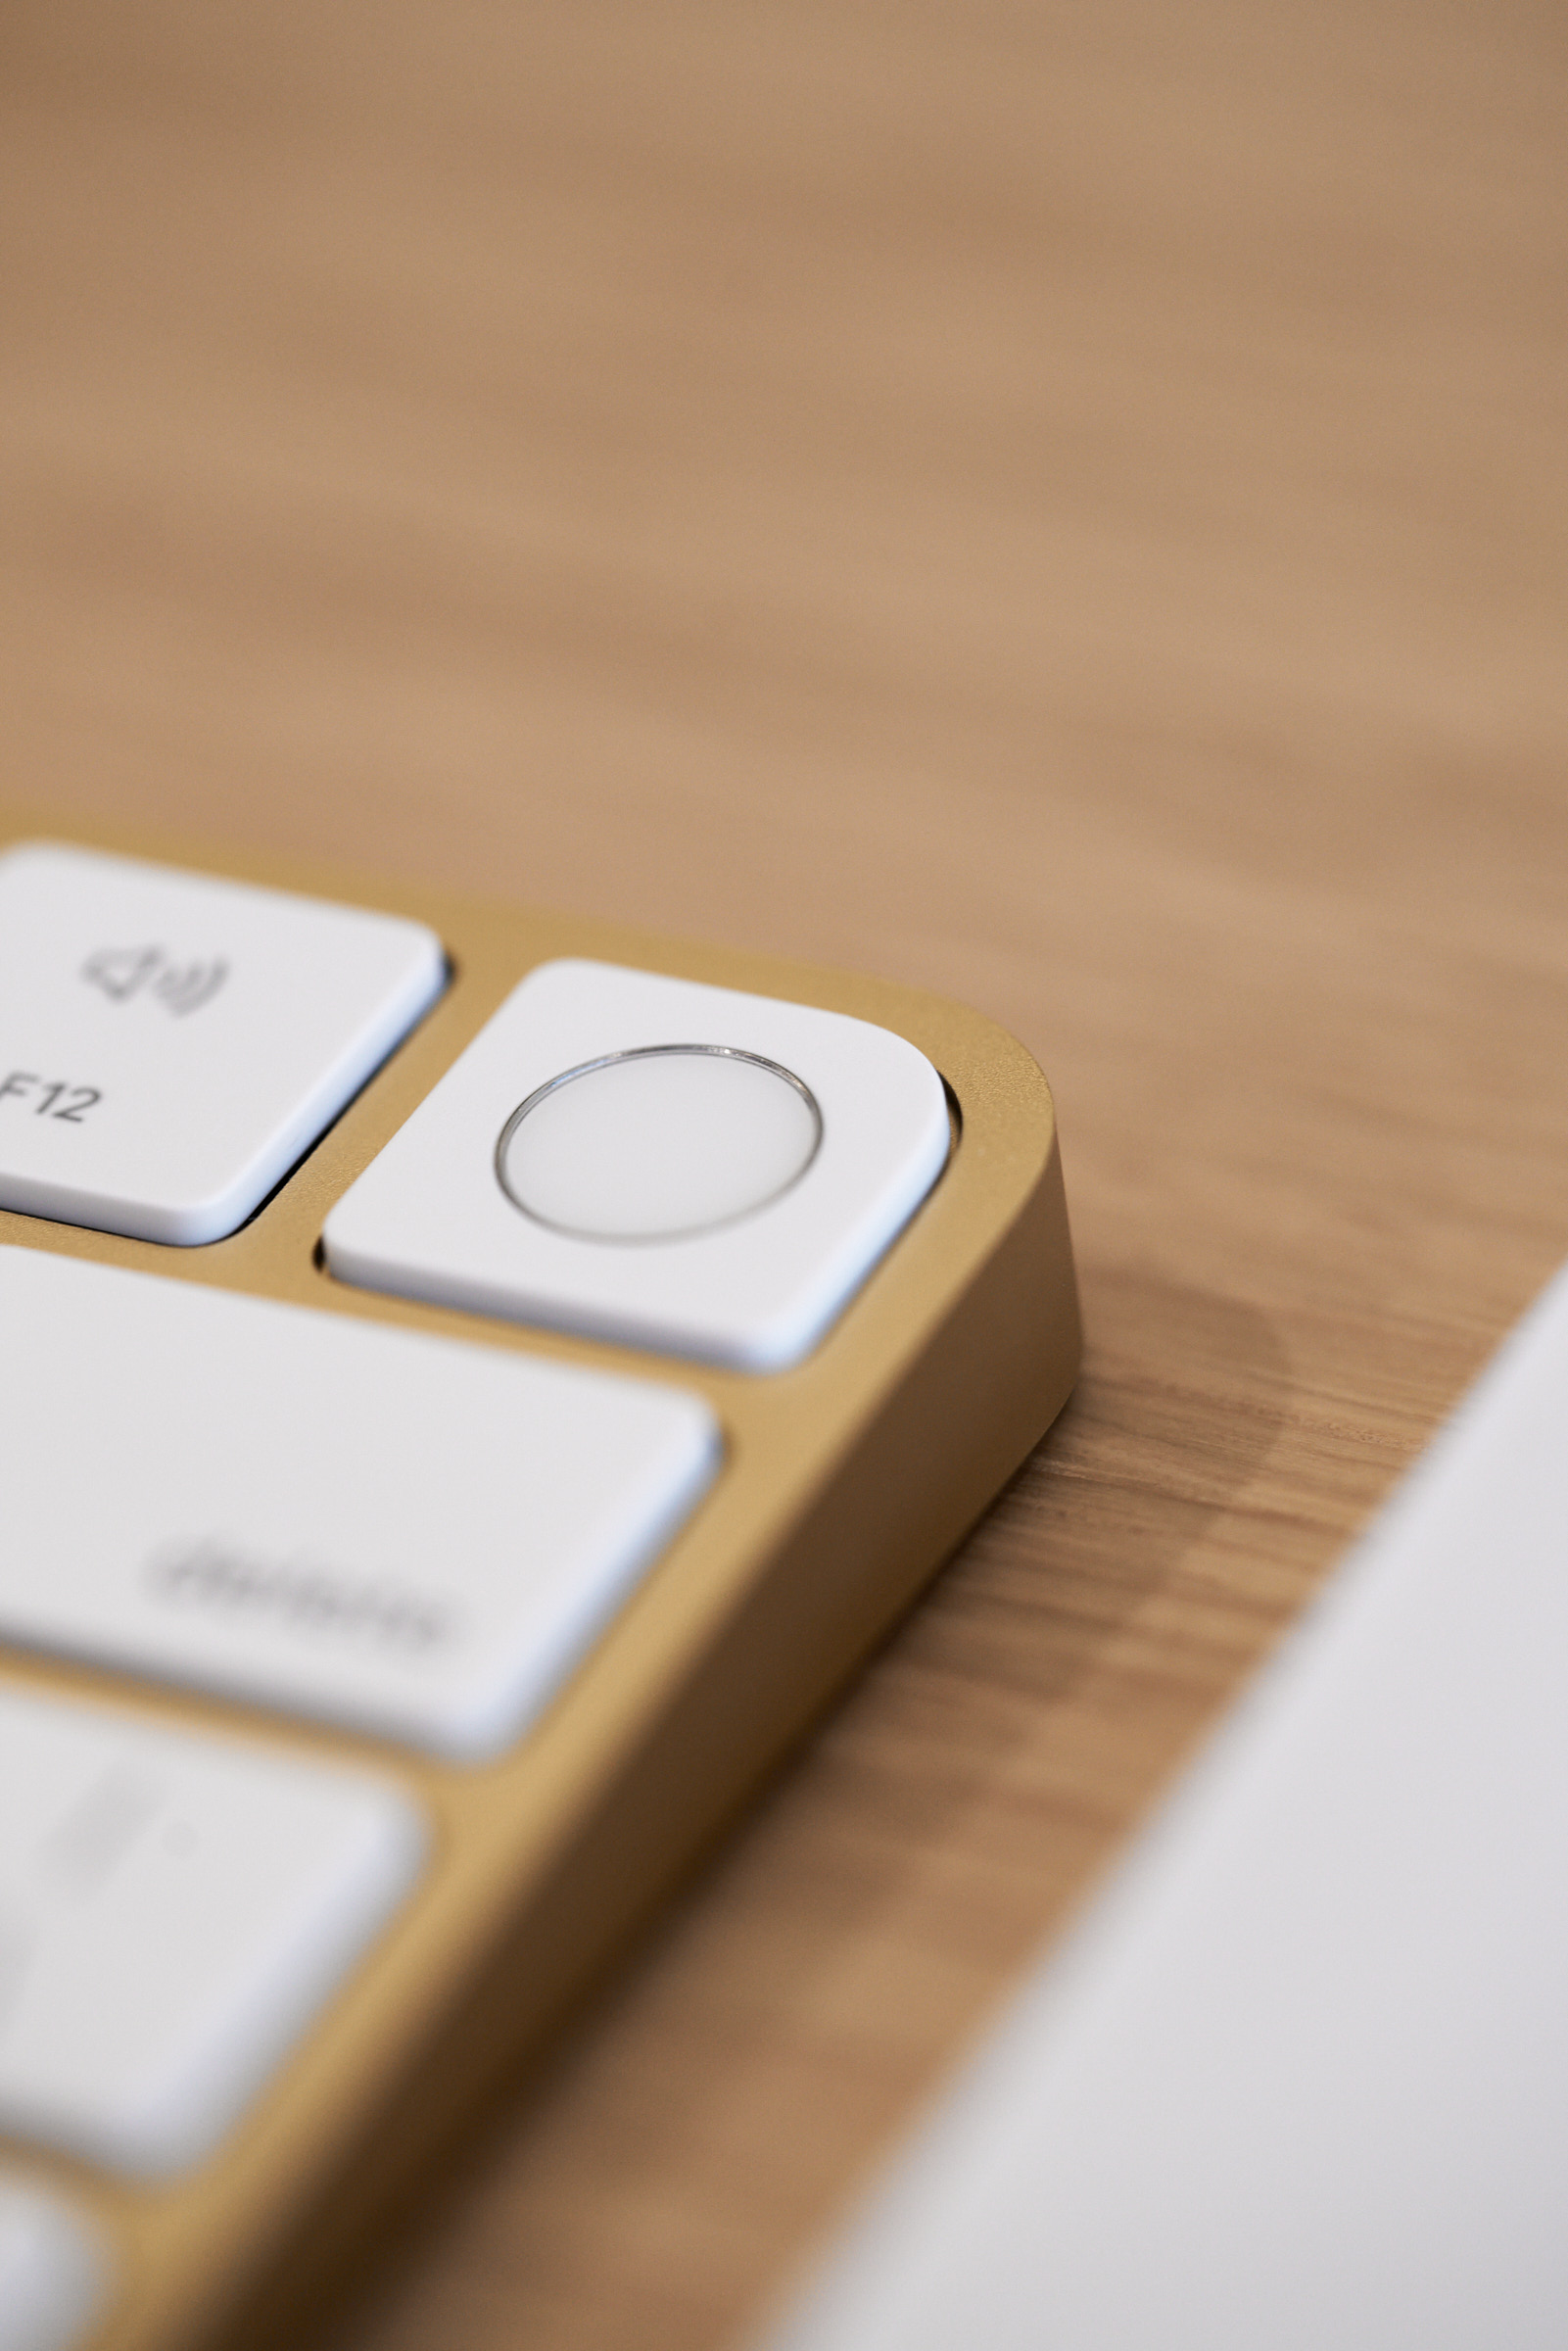 Touch ID new iMac Magic Keyboard